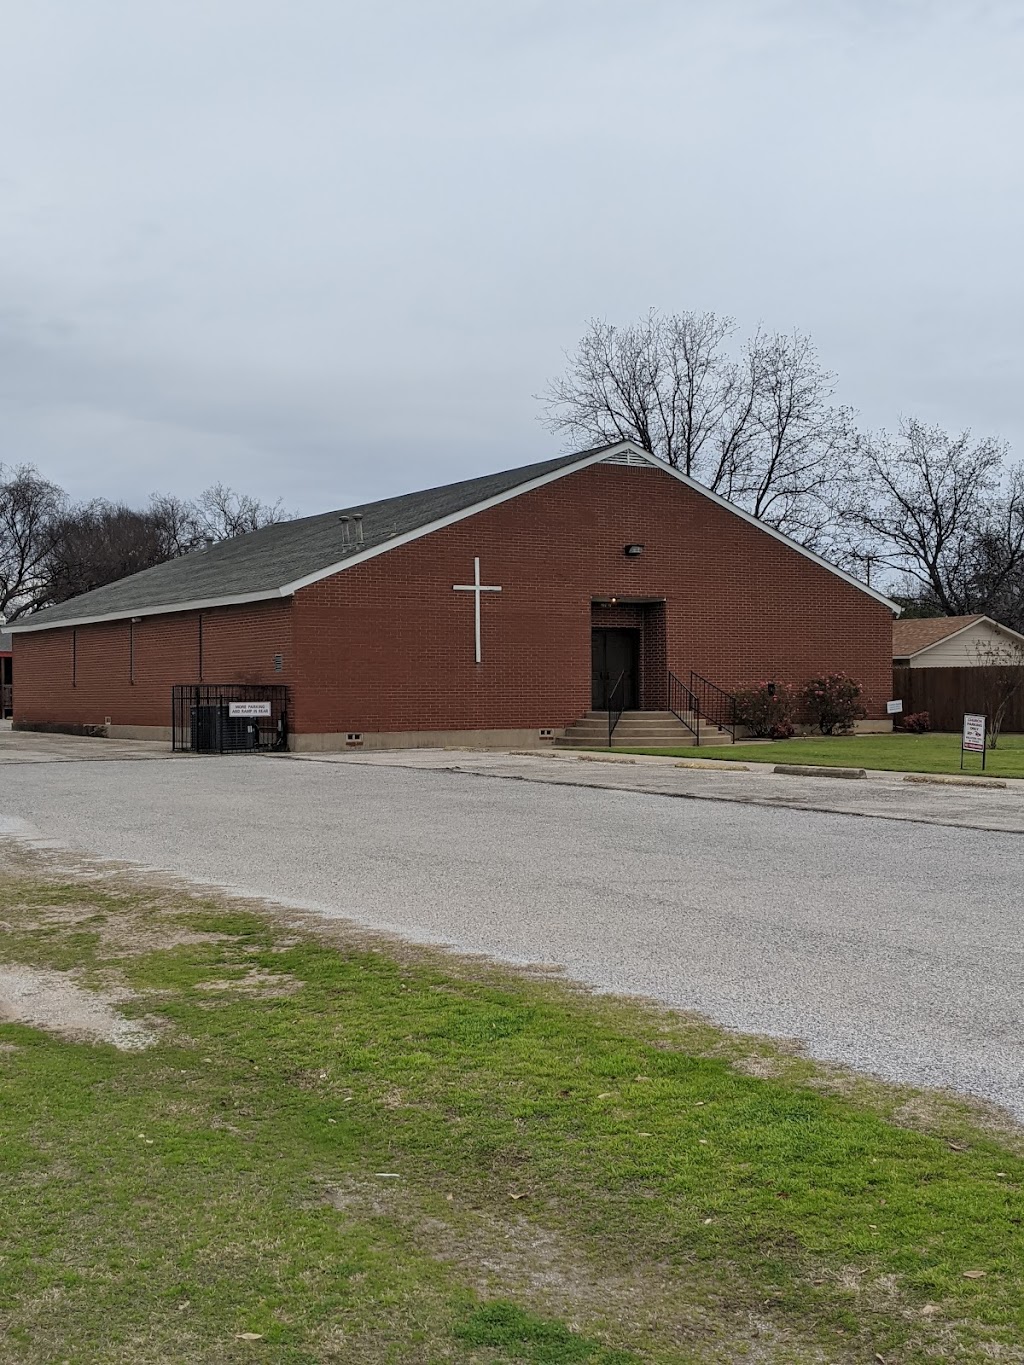 Light of the World Pentecostal Church | 2717 Carnation Ave, Fort Worth, TX 76111, USA | Phone: (817) 838-2539